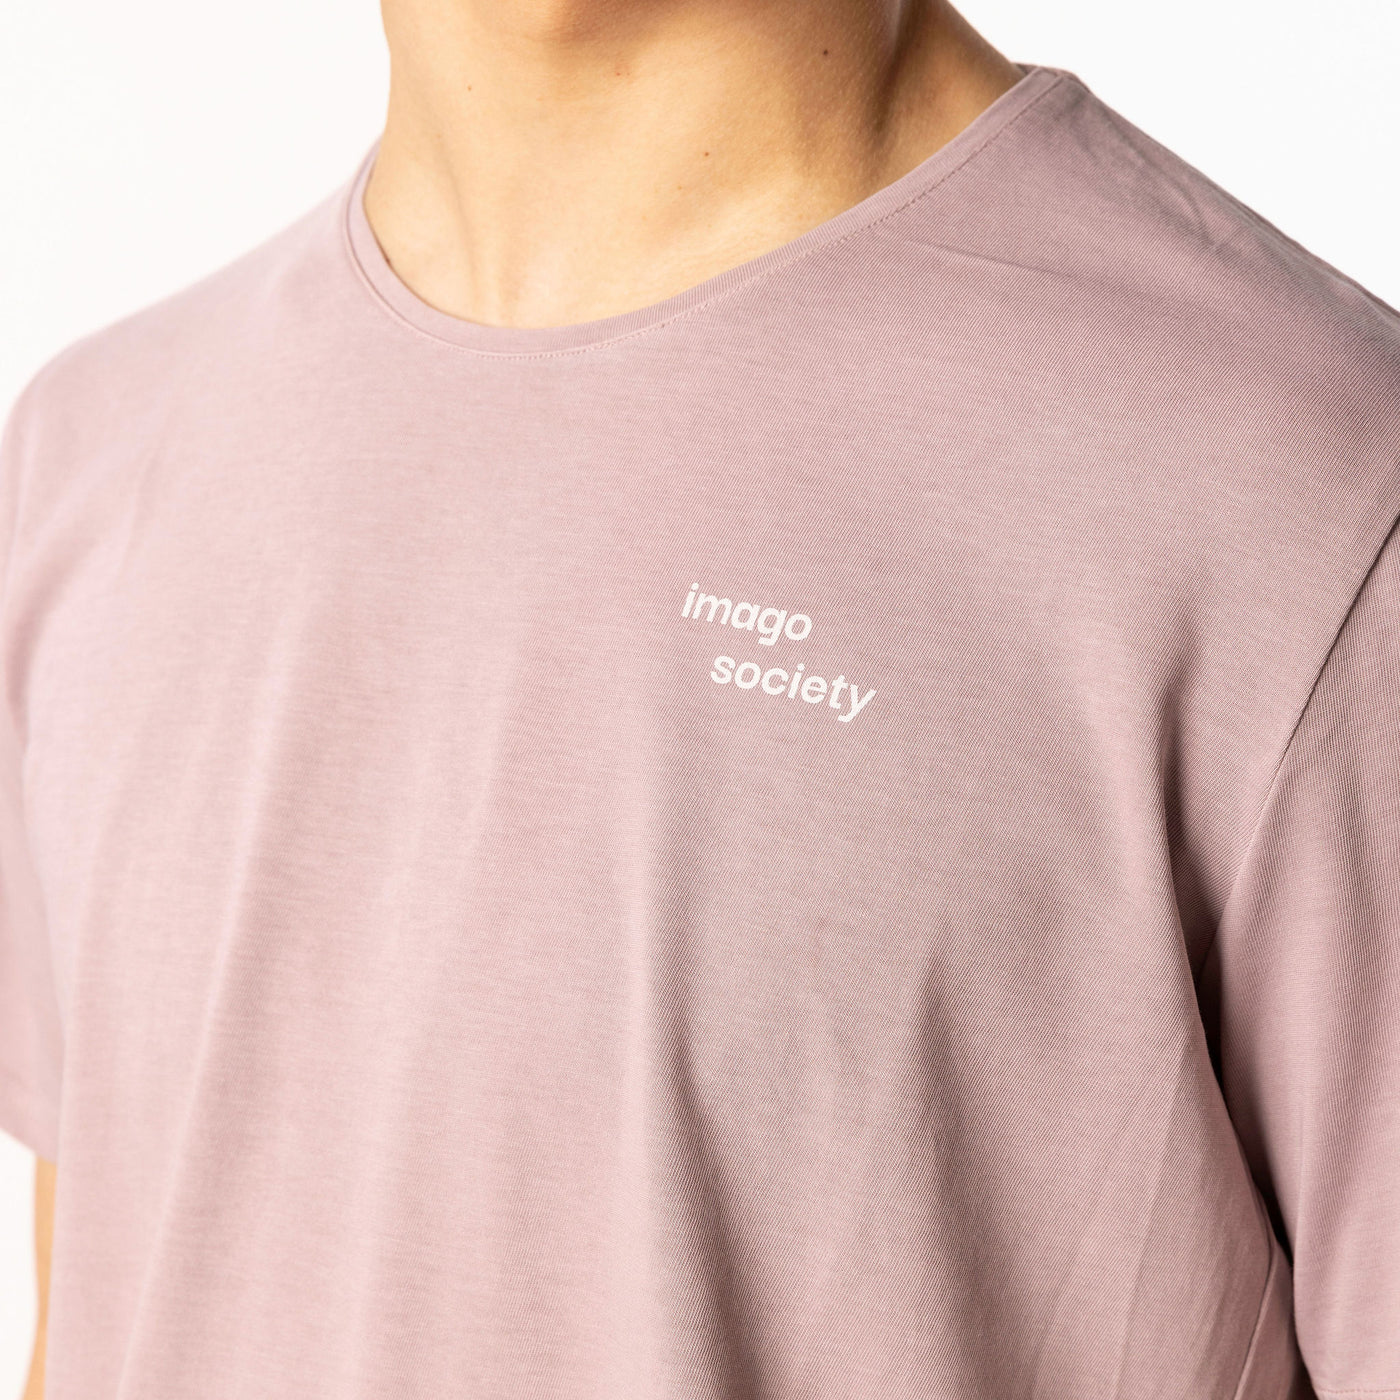 Imago Society T-shirt